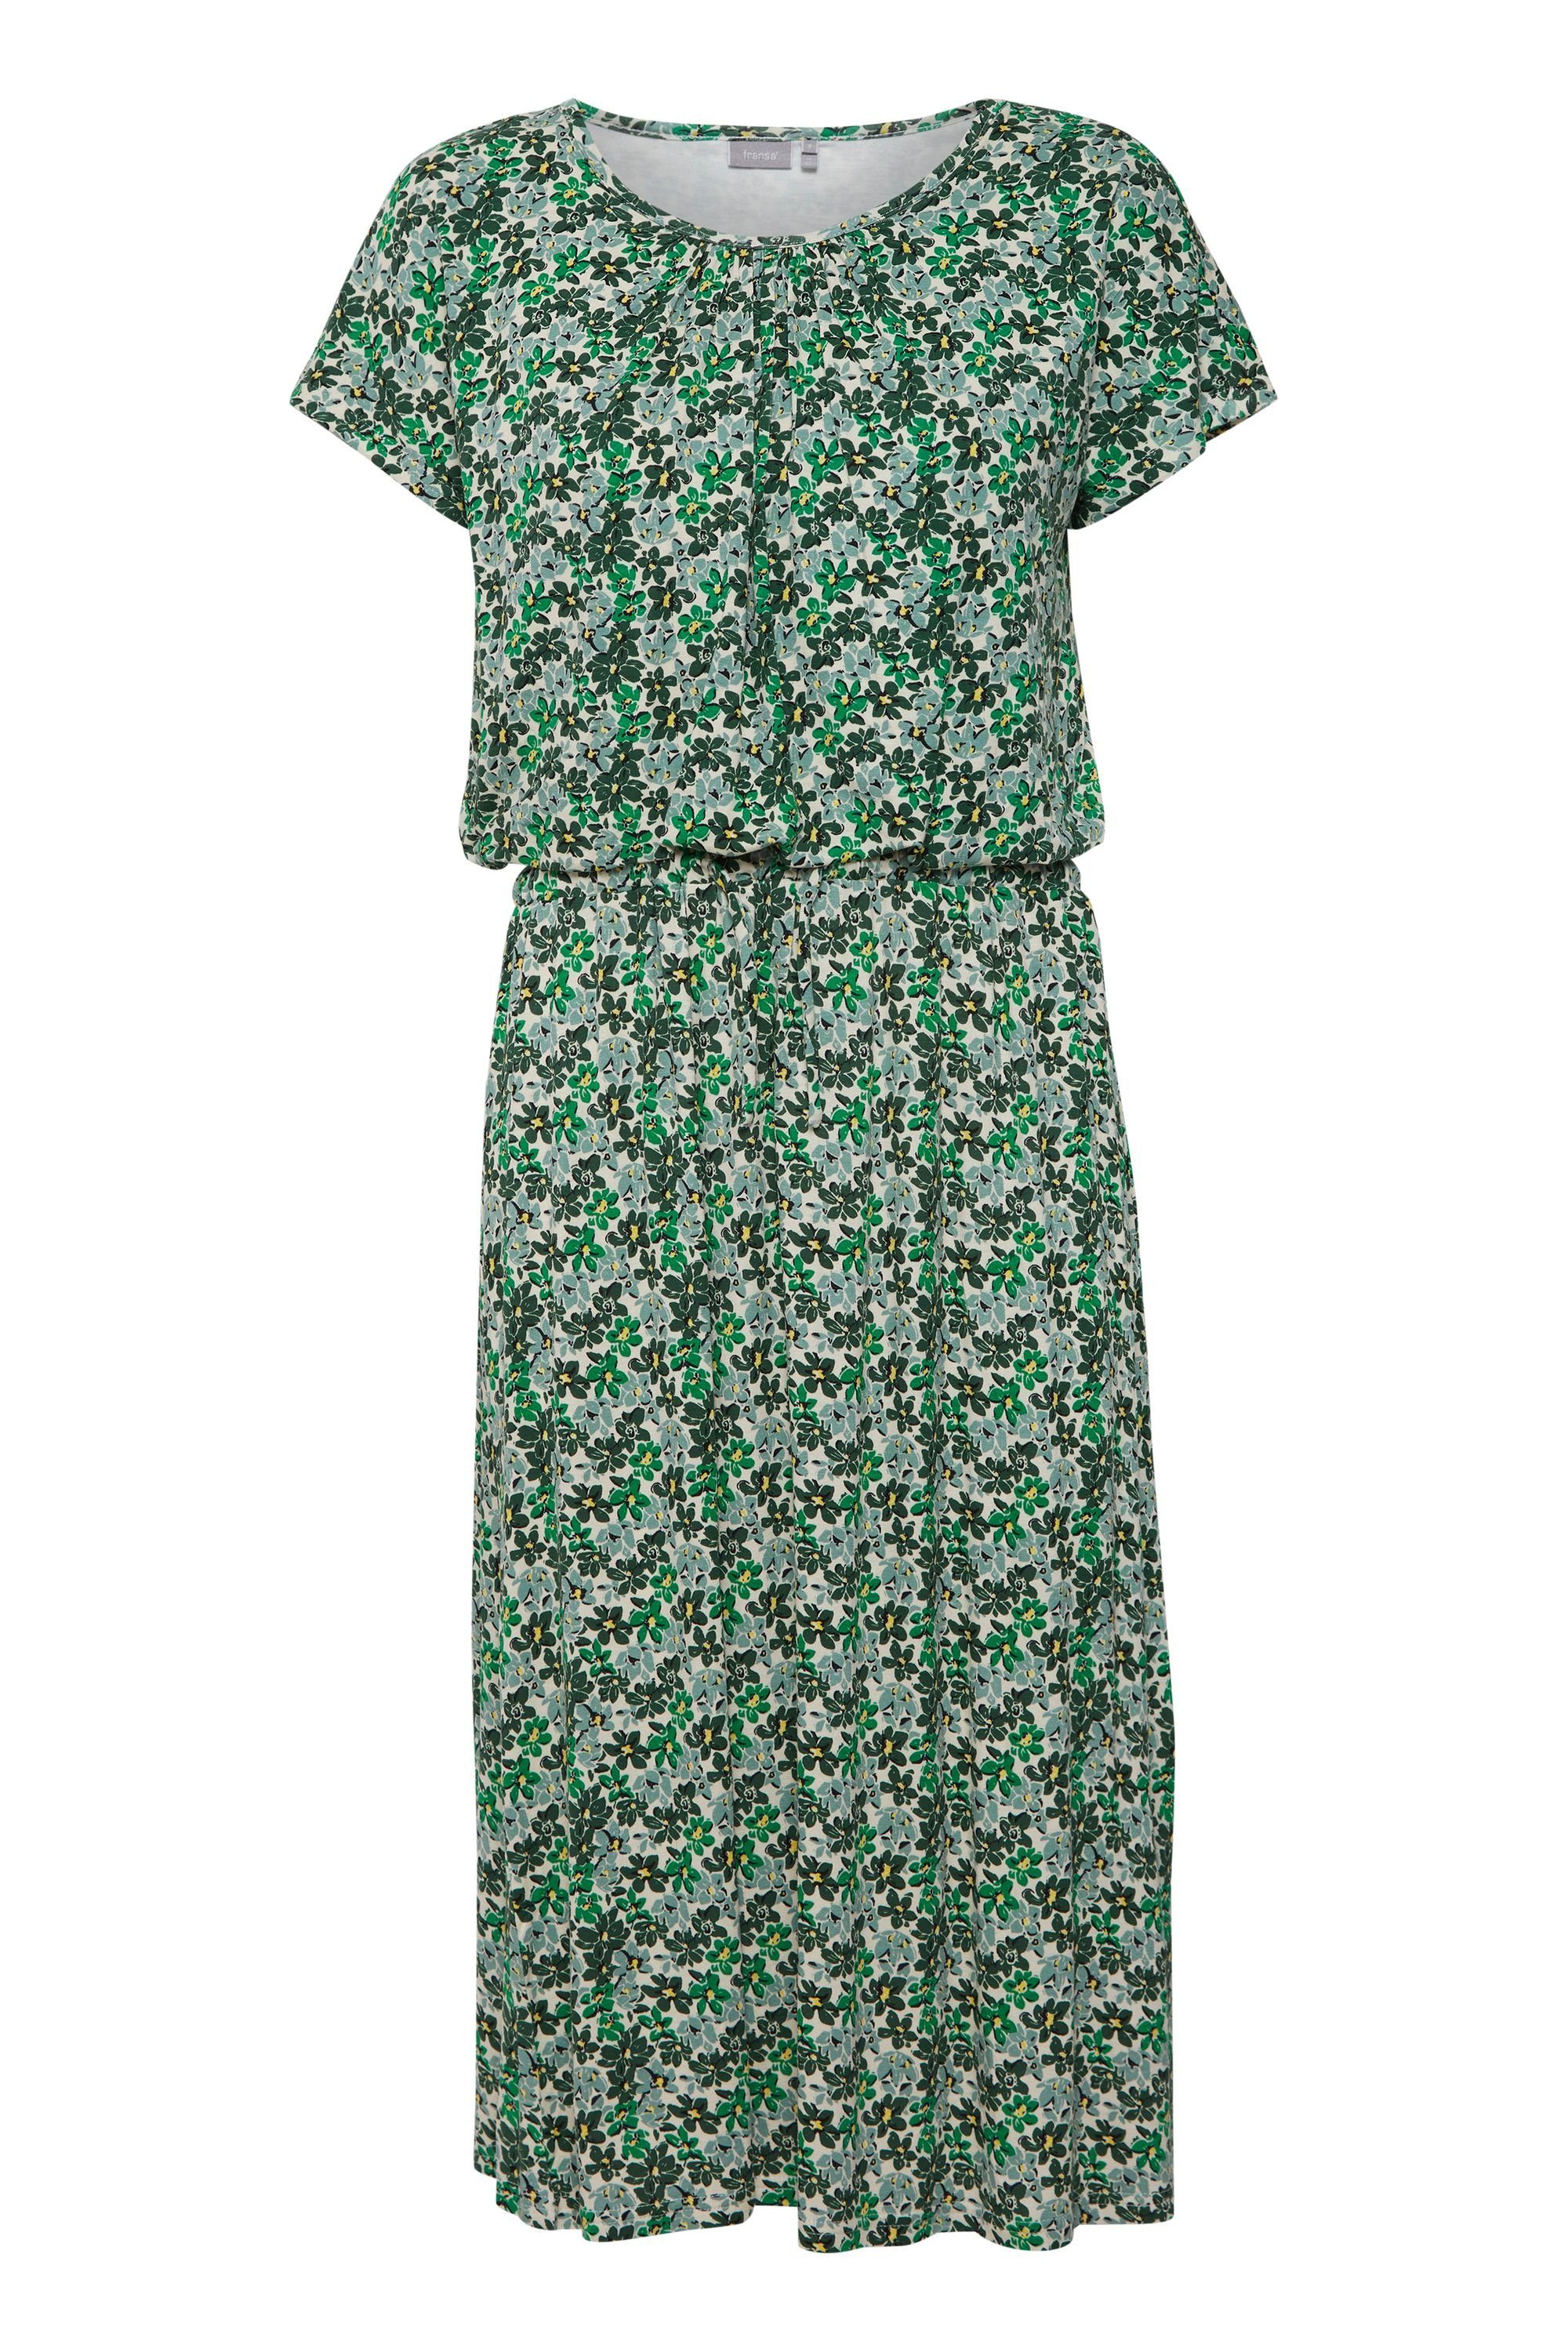 FRFEDOT Green mix Fransa 20610508 Blusenkleid fransa Malachite - Dress 5